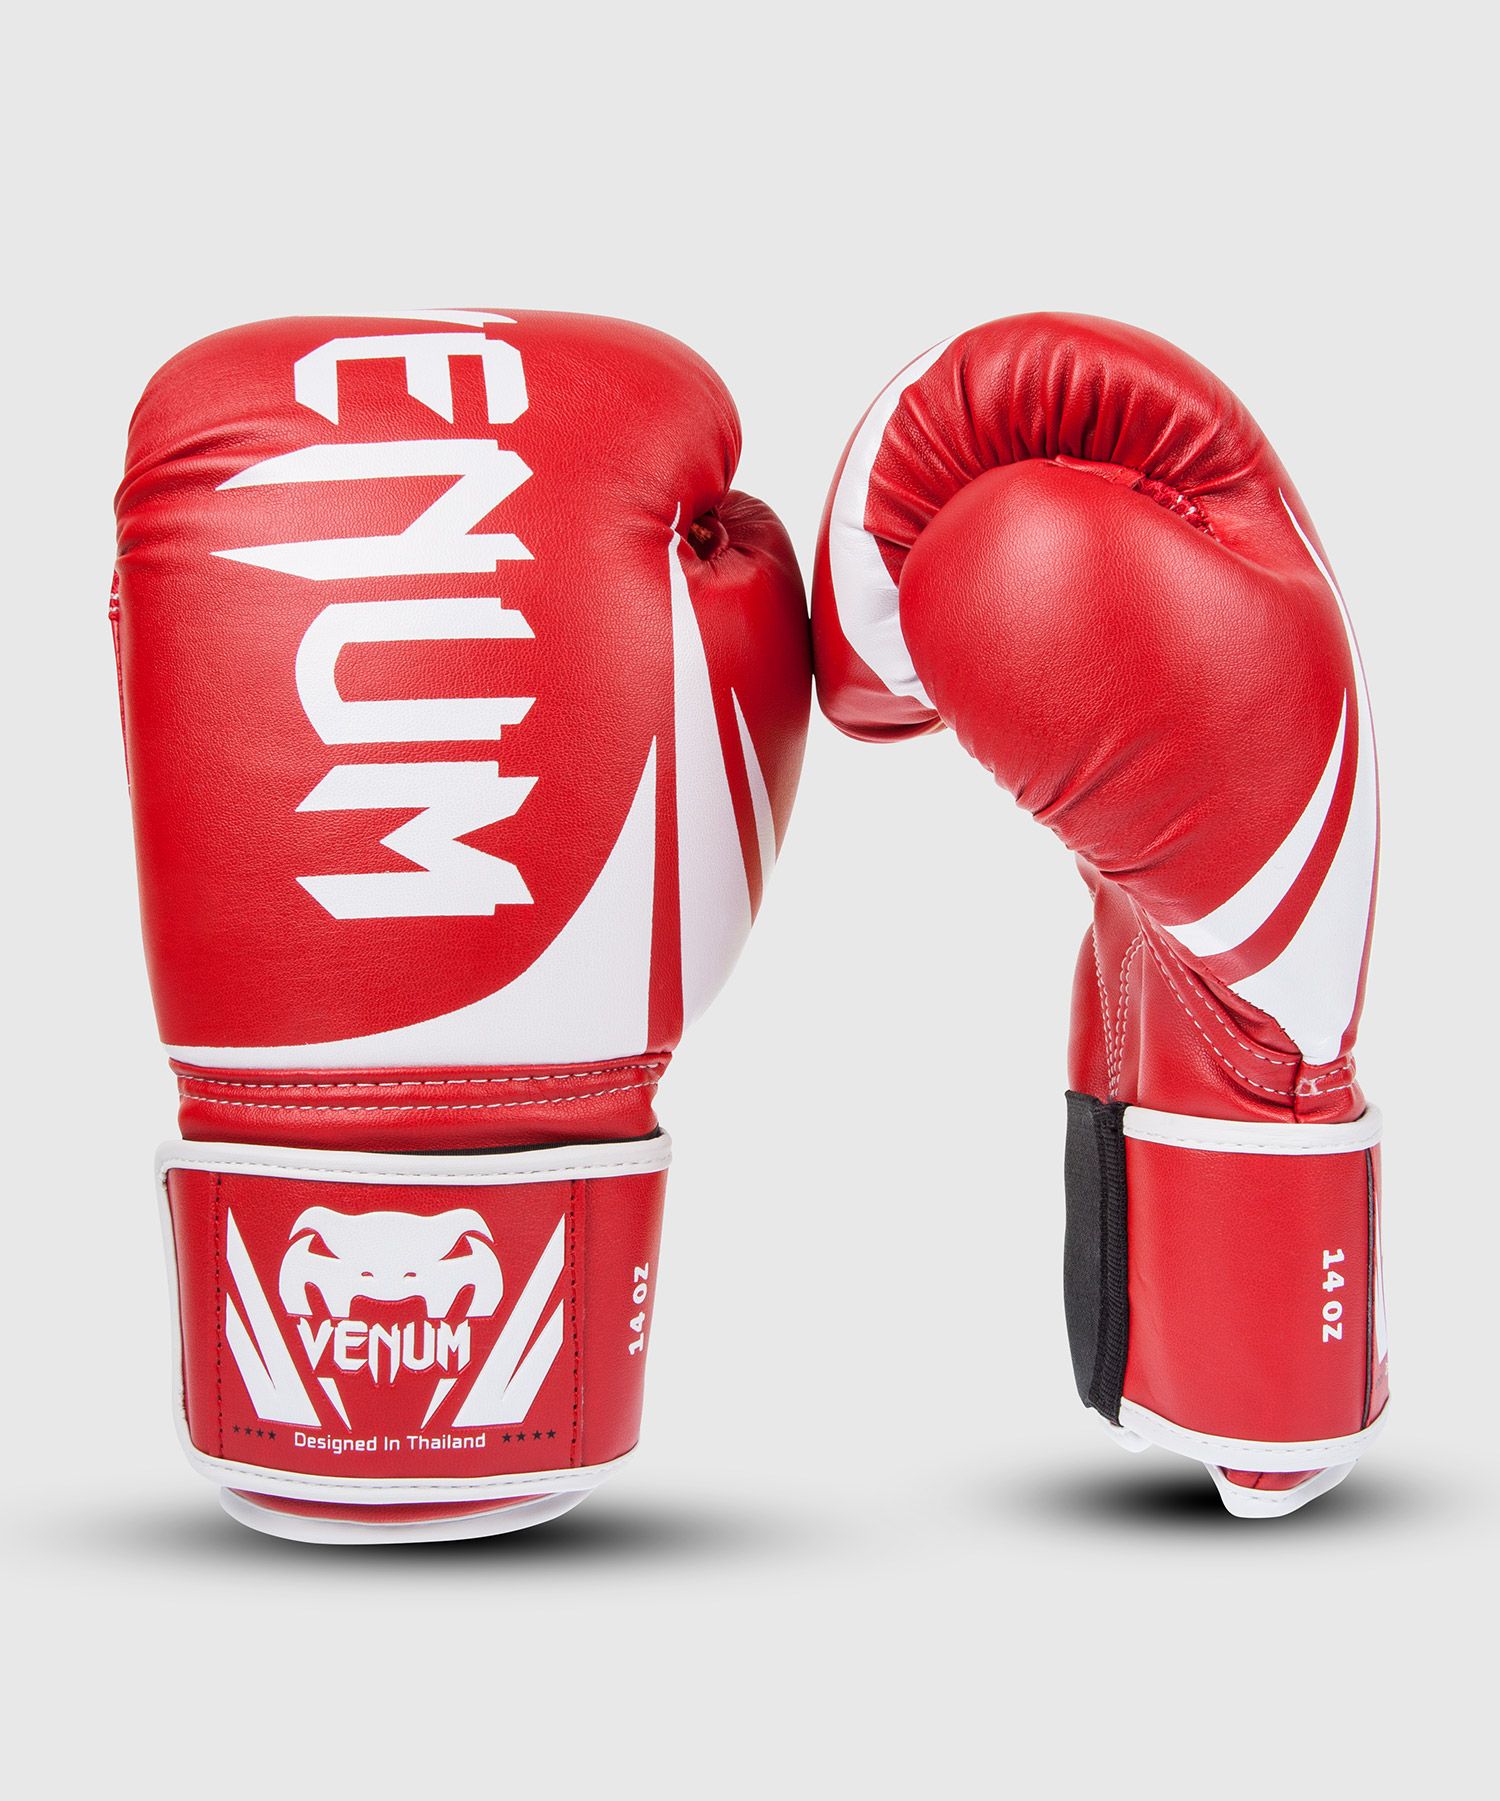 Venum Challenger 2.0 Boxing Gloves - Red